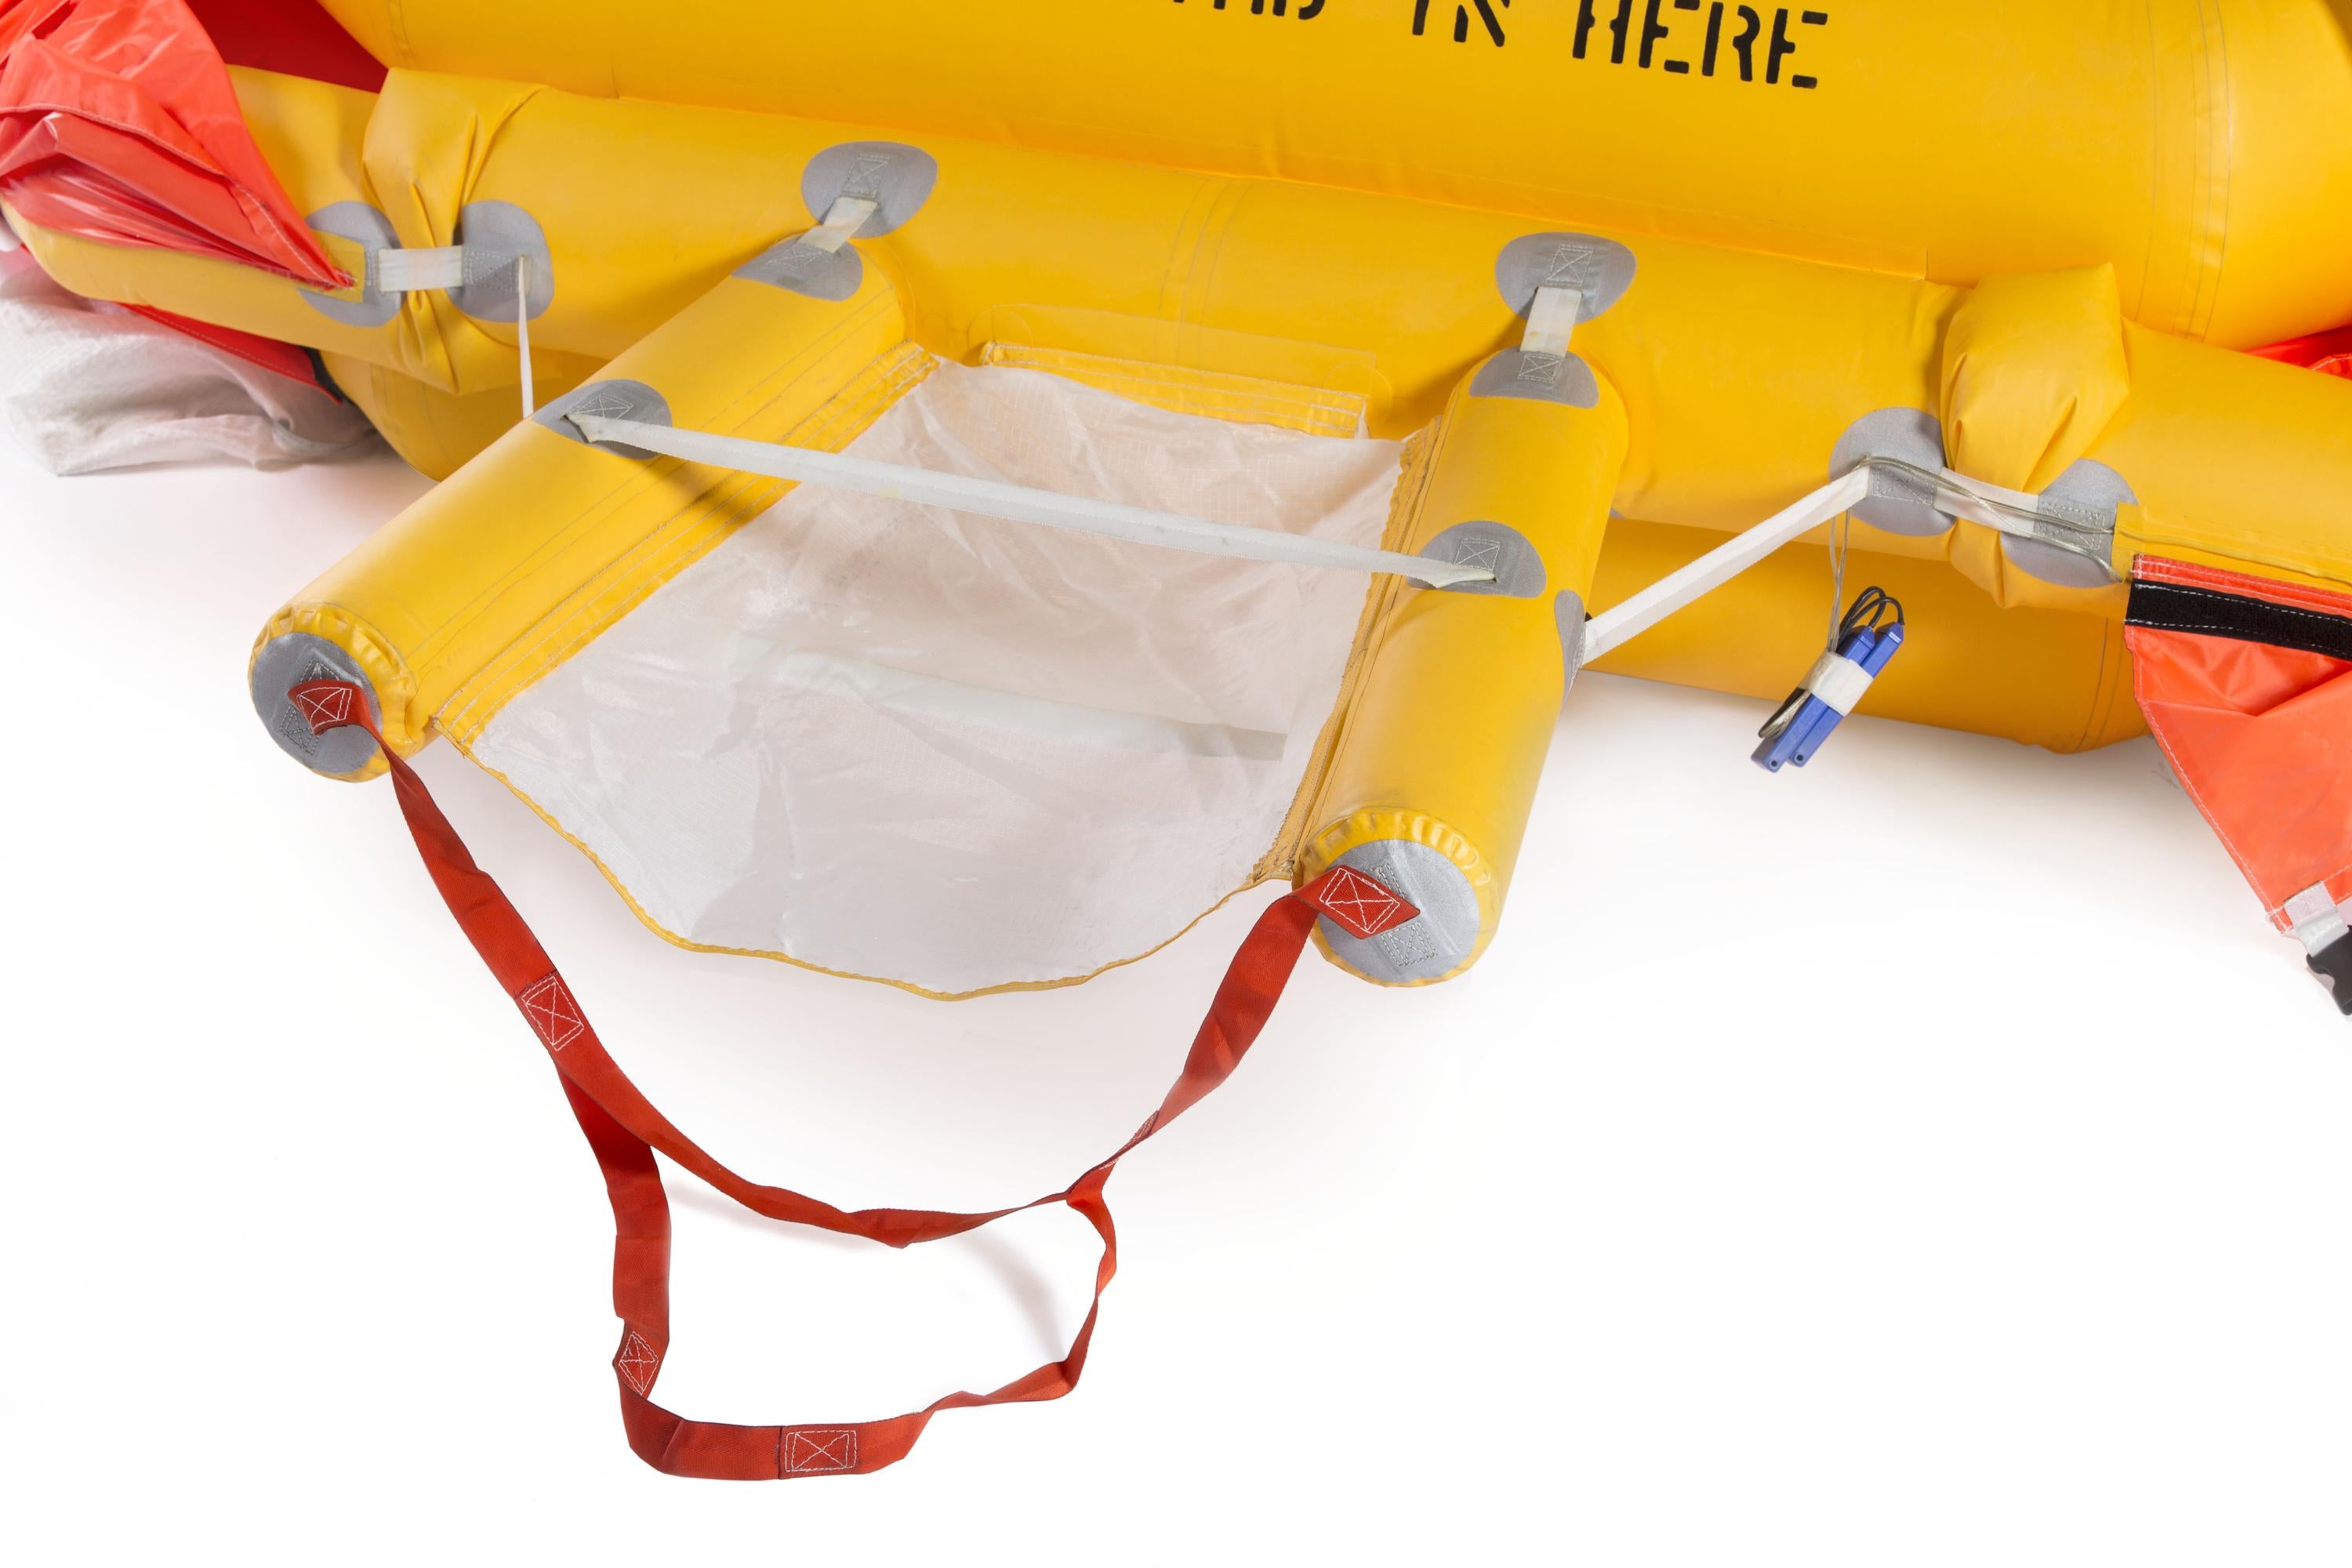 412 tri-bag float system with liferafts 